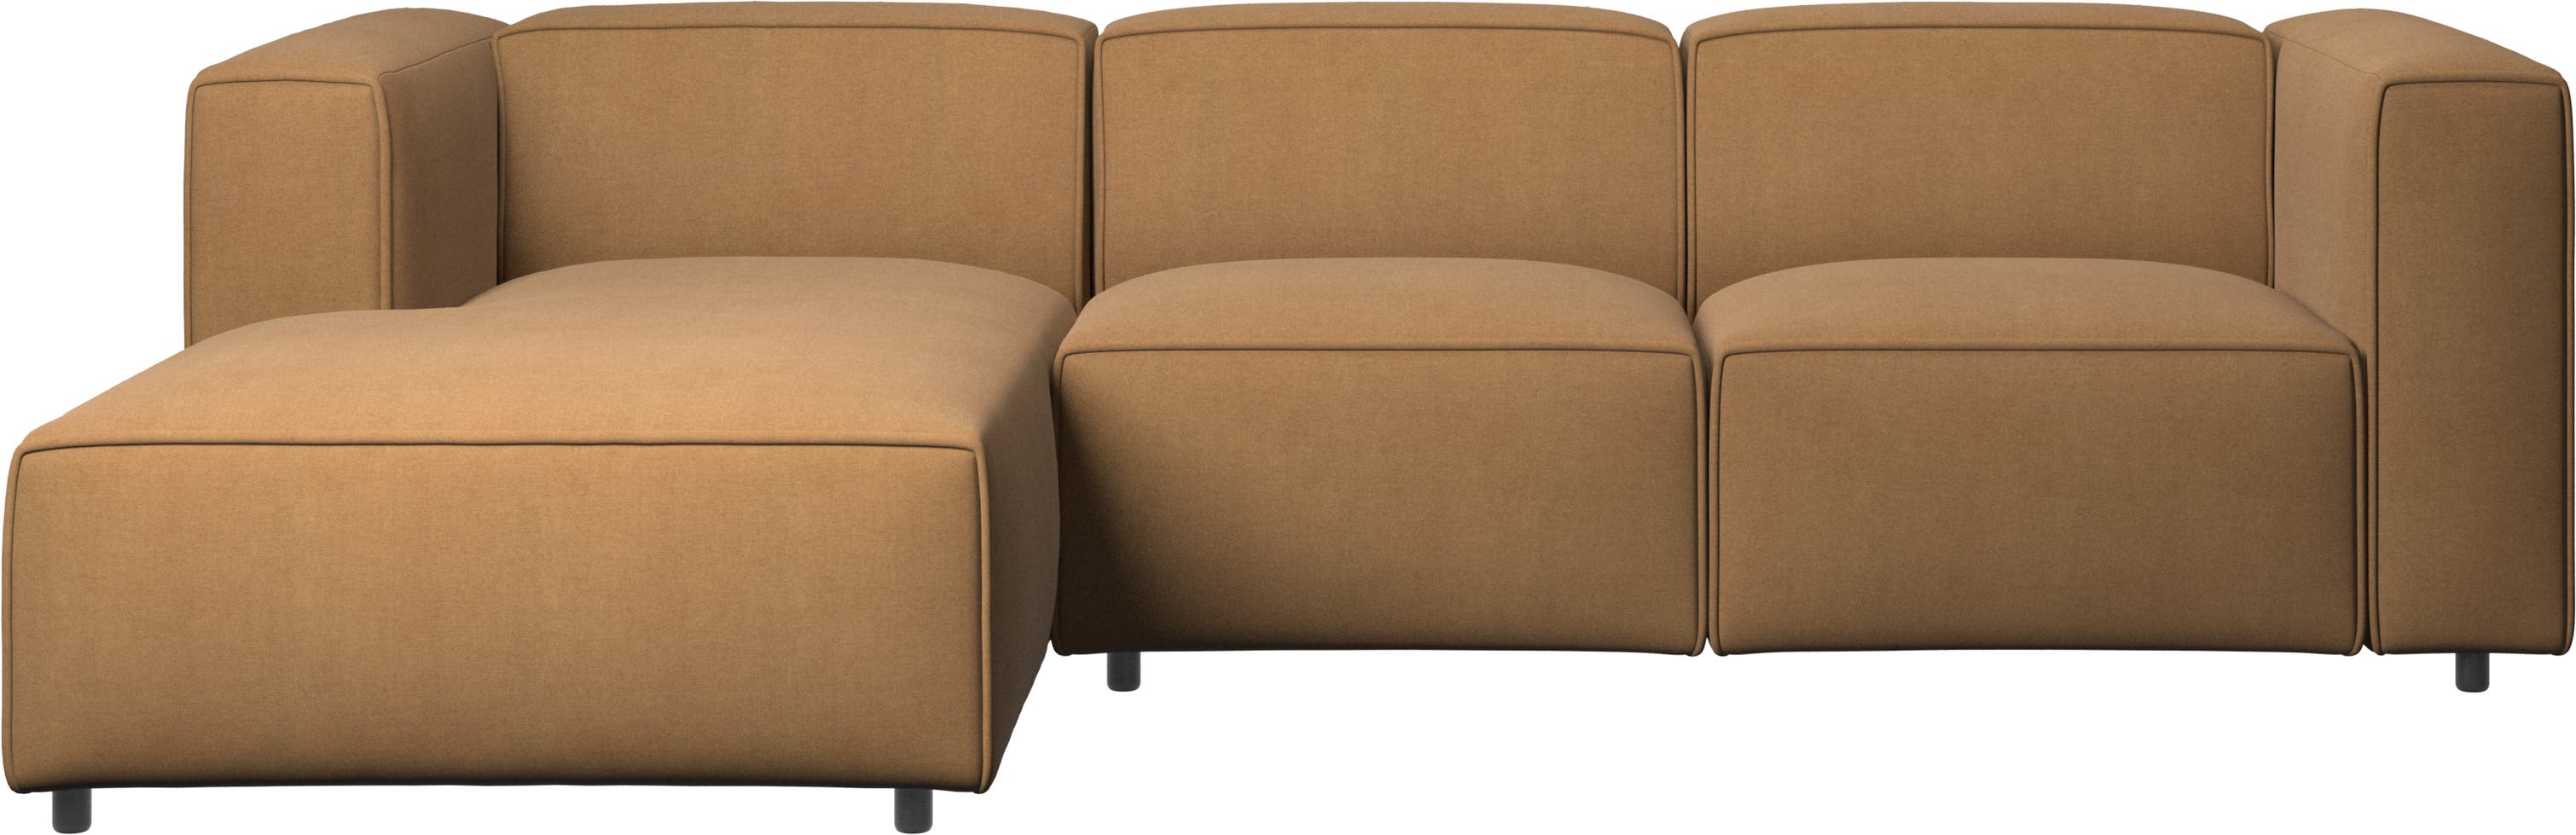 Carmo sofa med funktionssæde og chaiselong